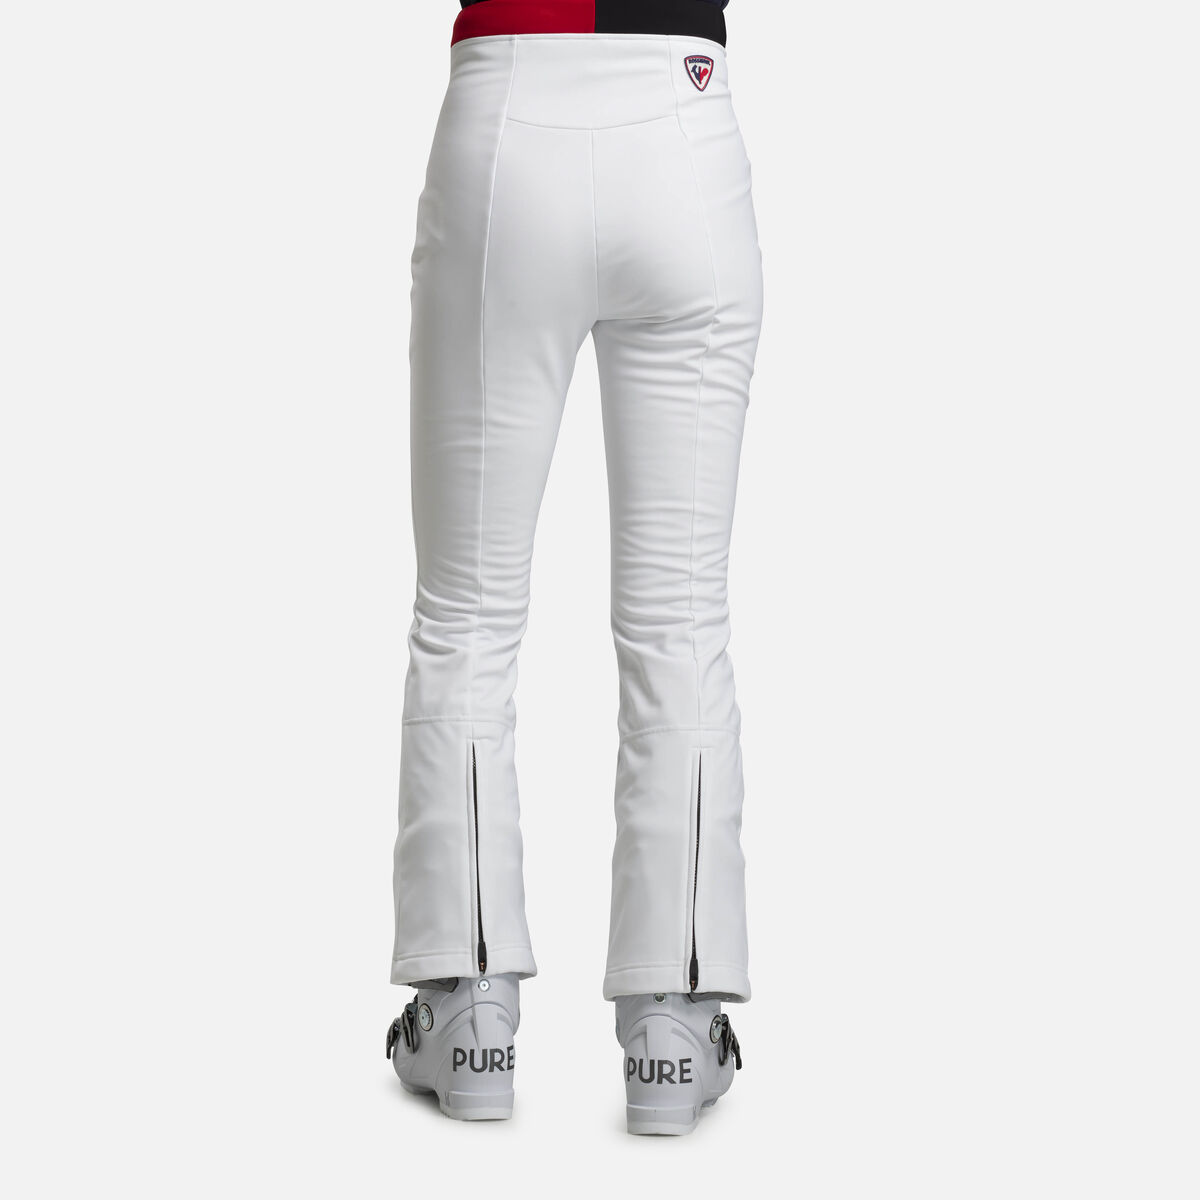 Rossignol Women's Medaille Ski Pants White